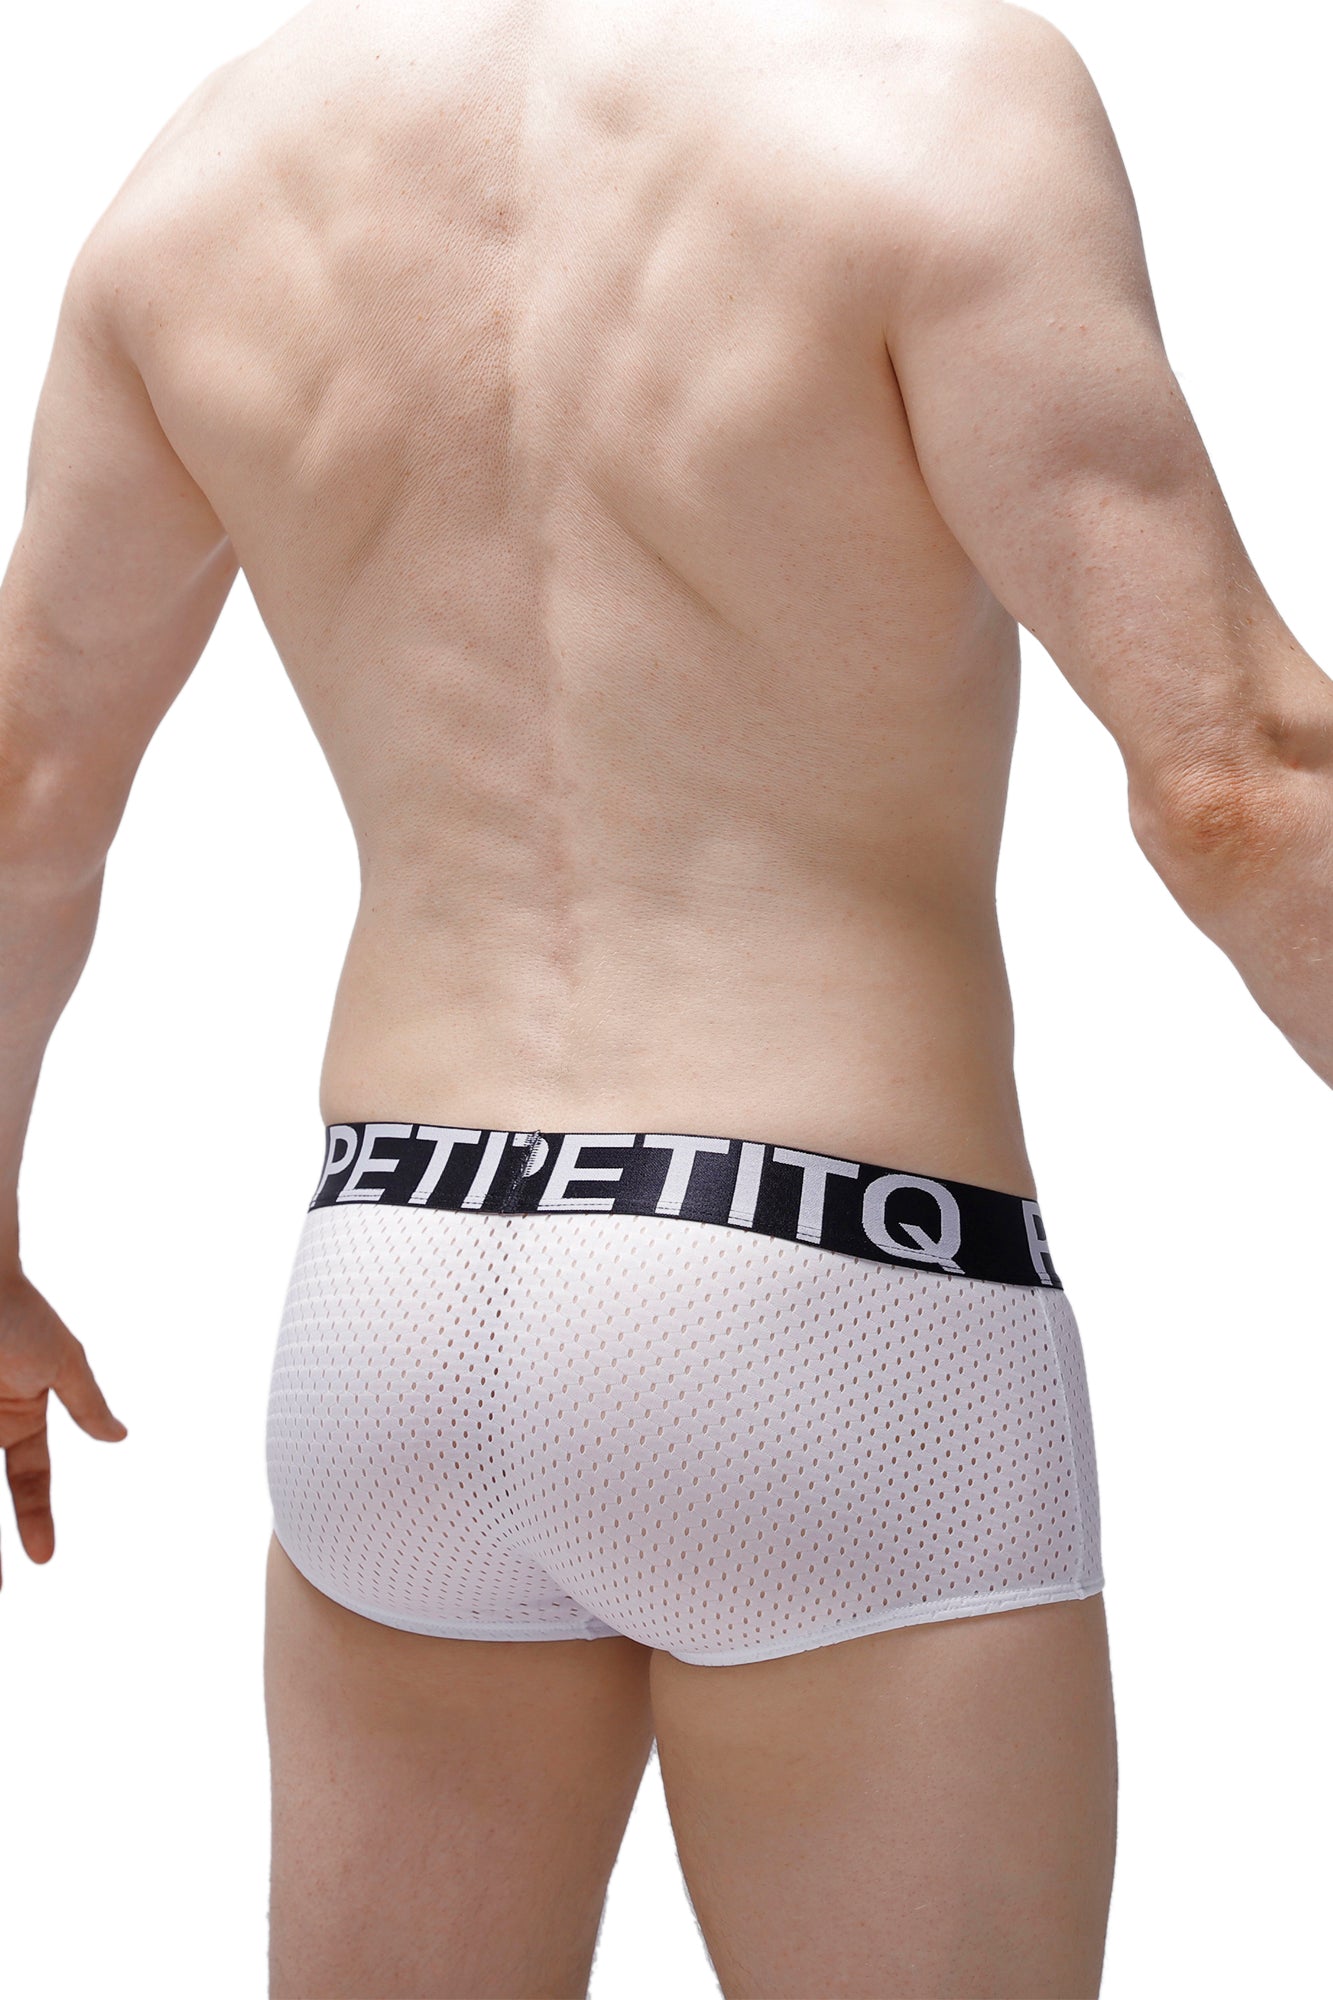 Boxer Double Pouch Bee White – PetitQ Underwear, Men's Sexy